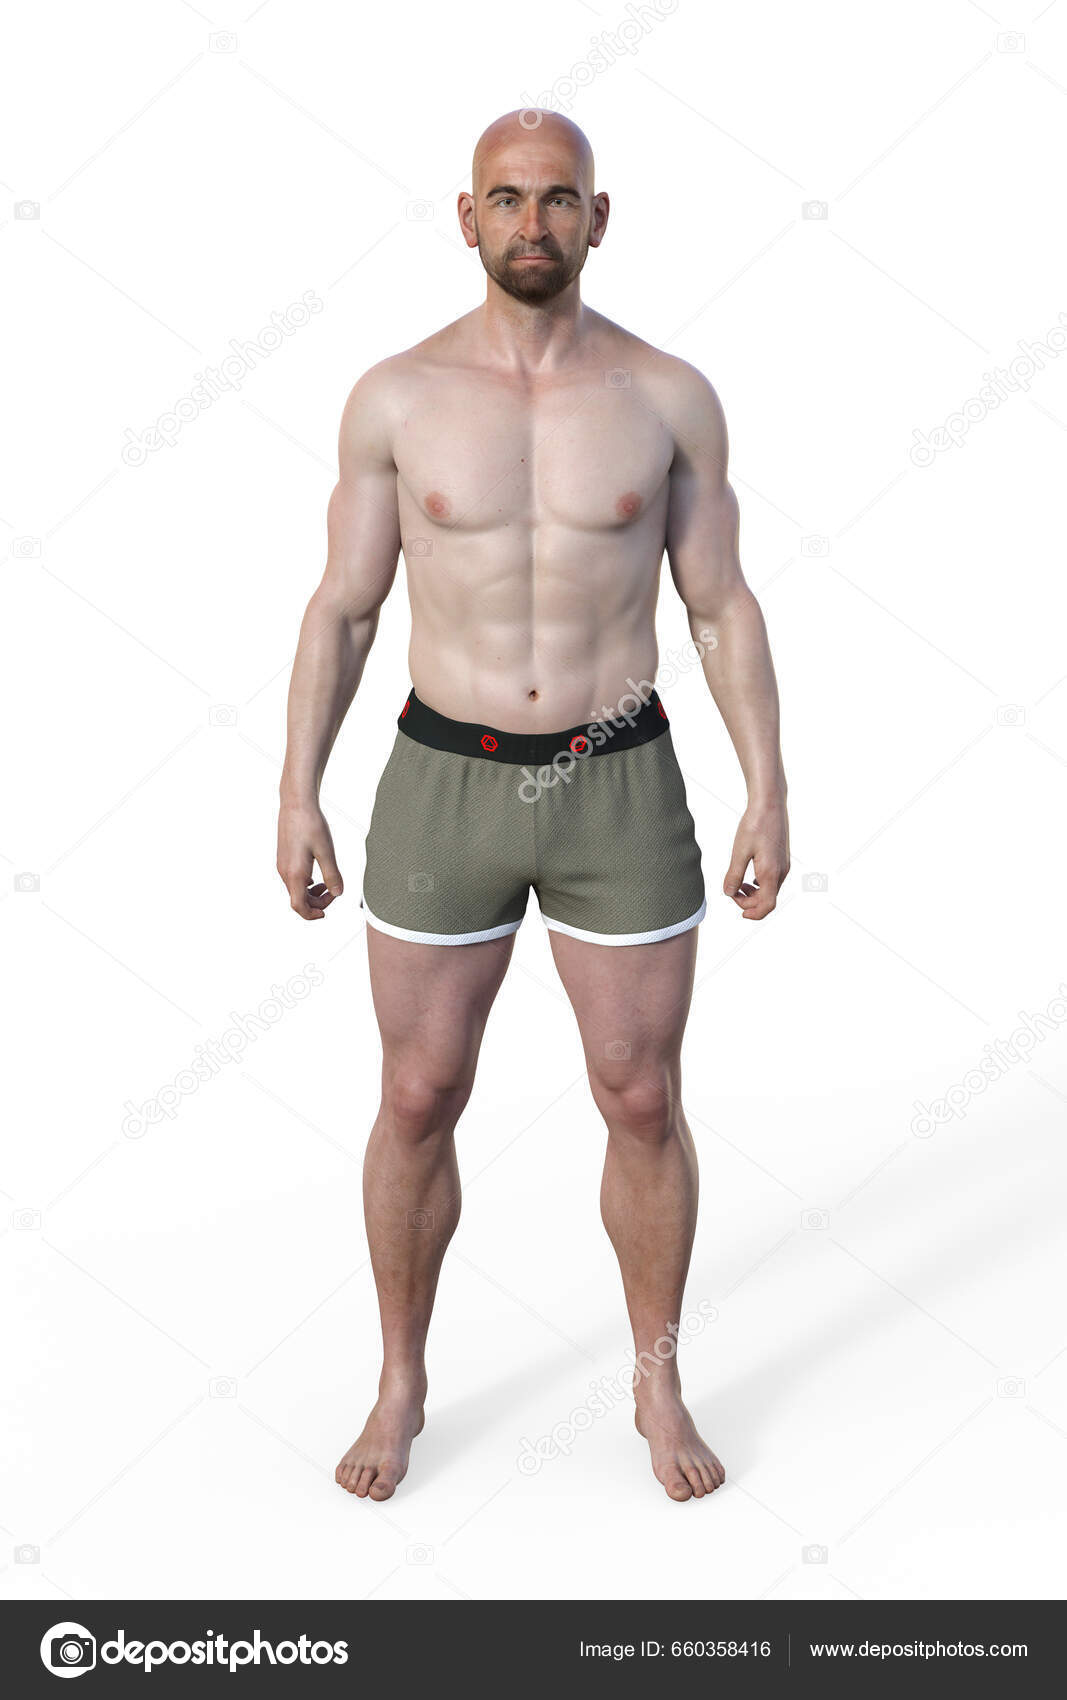 https://st5.depositphotos.com/5316818/66035/i/1600/depositphotos_660358416-stock-photo-illustration-male-body-mesomorph-body.jpg